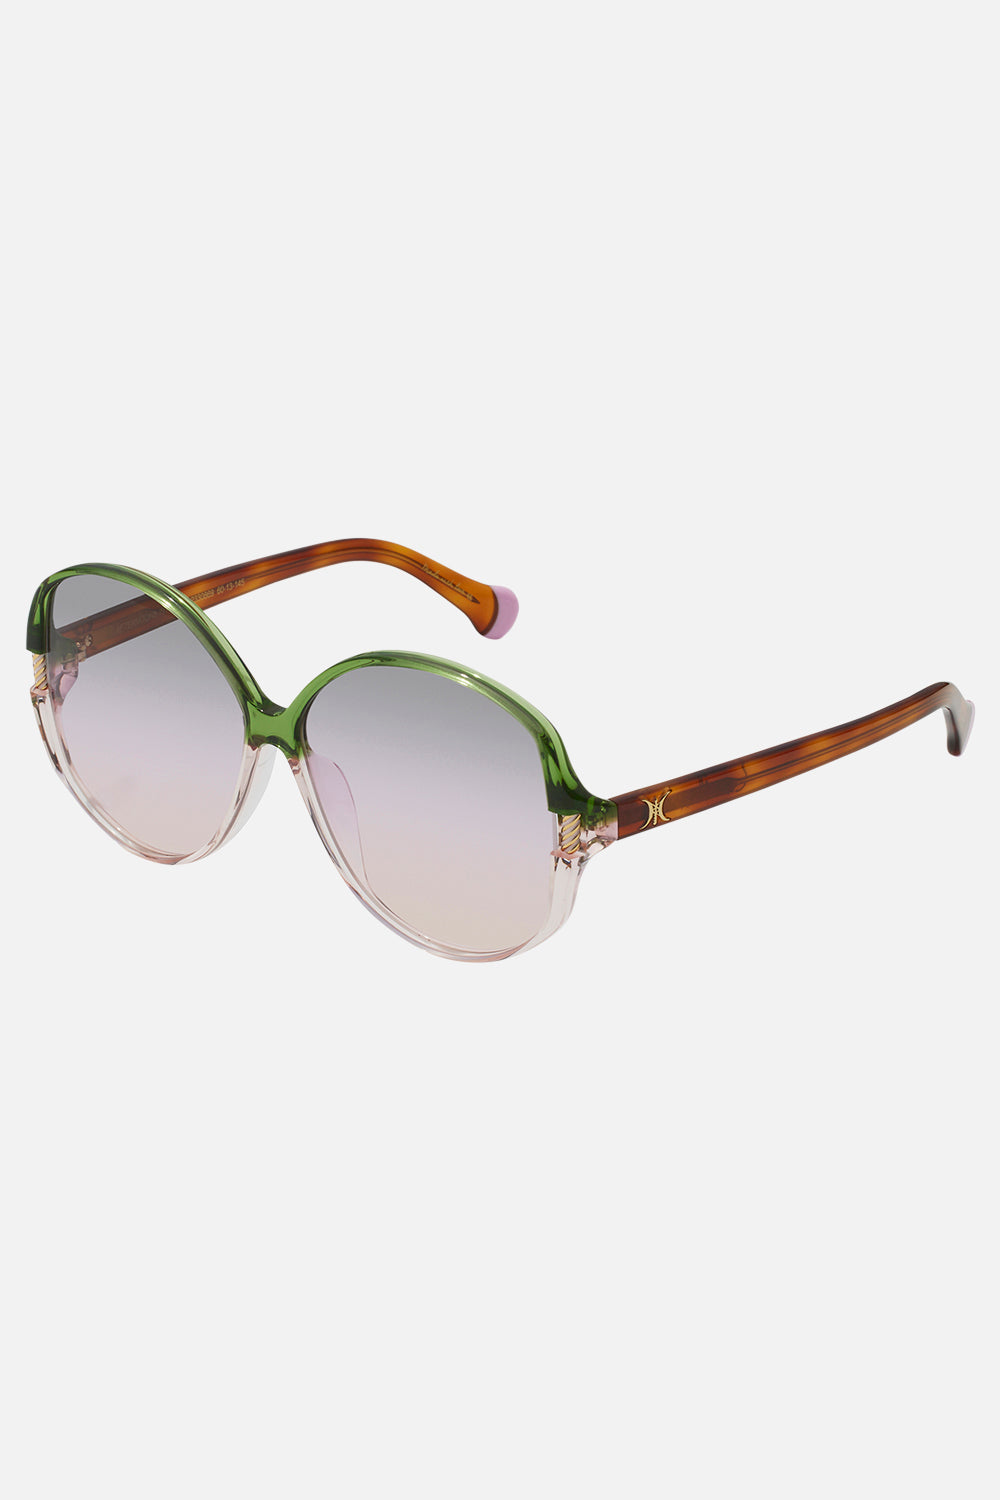 Product view of CAMILLA green and tortoiseshell designer sunglasses 